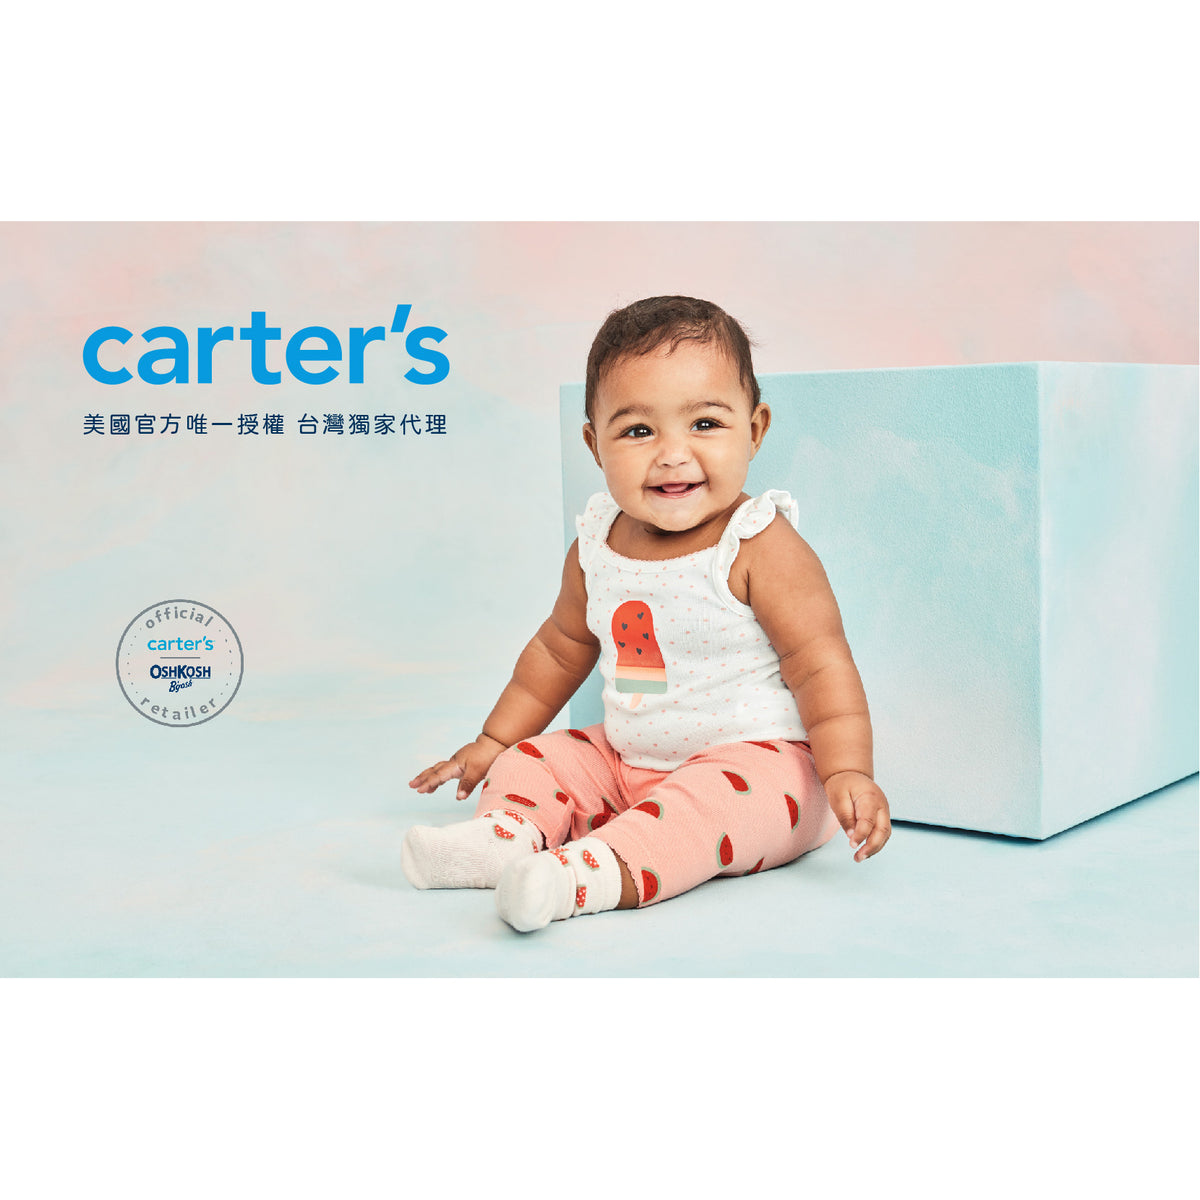 Carter's 無袖荷葉花邊蛋糕洋裝(6M-24M)